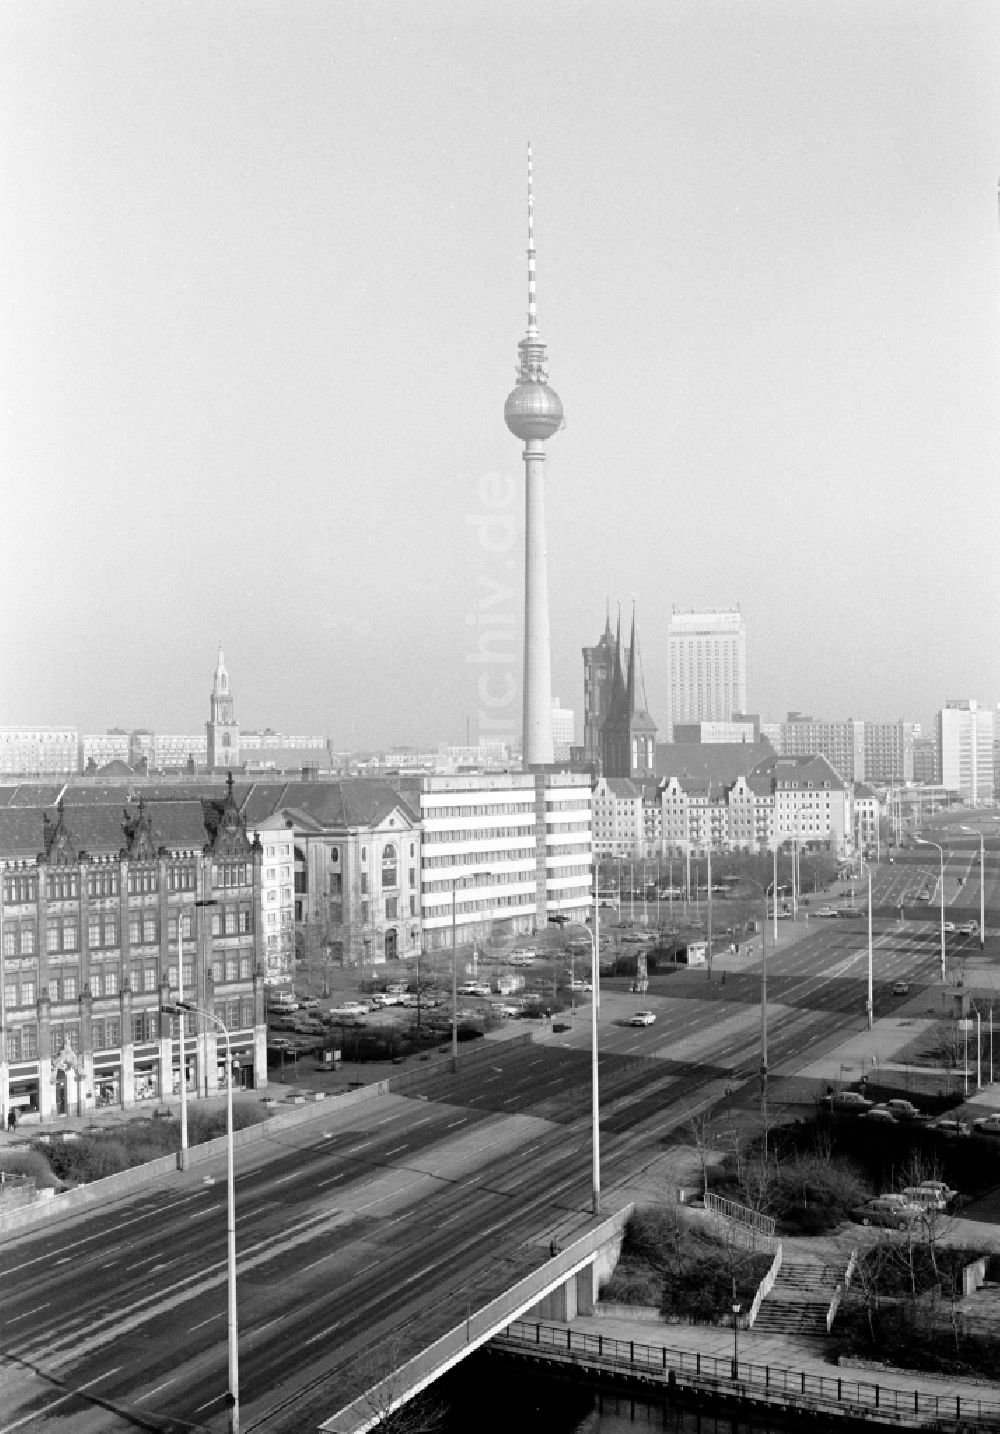 DDR-Fotoarchiv: Berlin - Straßenführung am Spittelmarkt in Berlin in der DDR